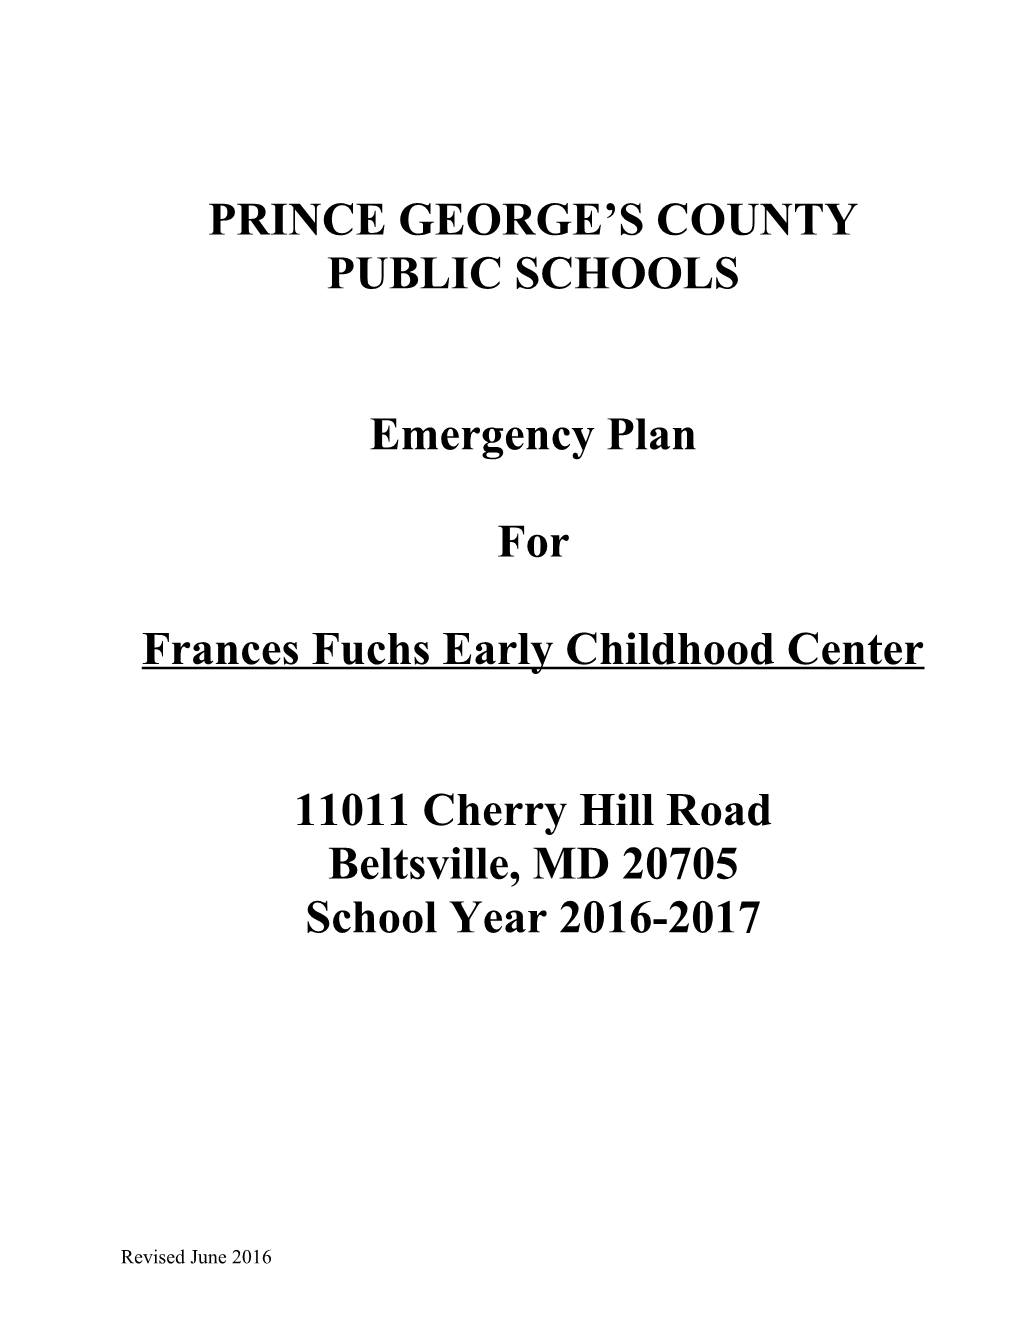 Prince George S County Public Schools Emergency Plan, 2016 2017